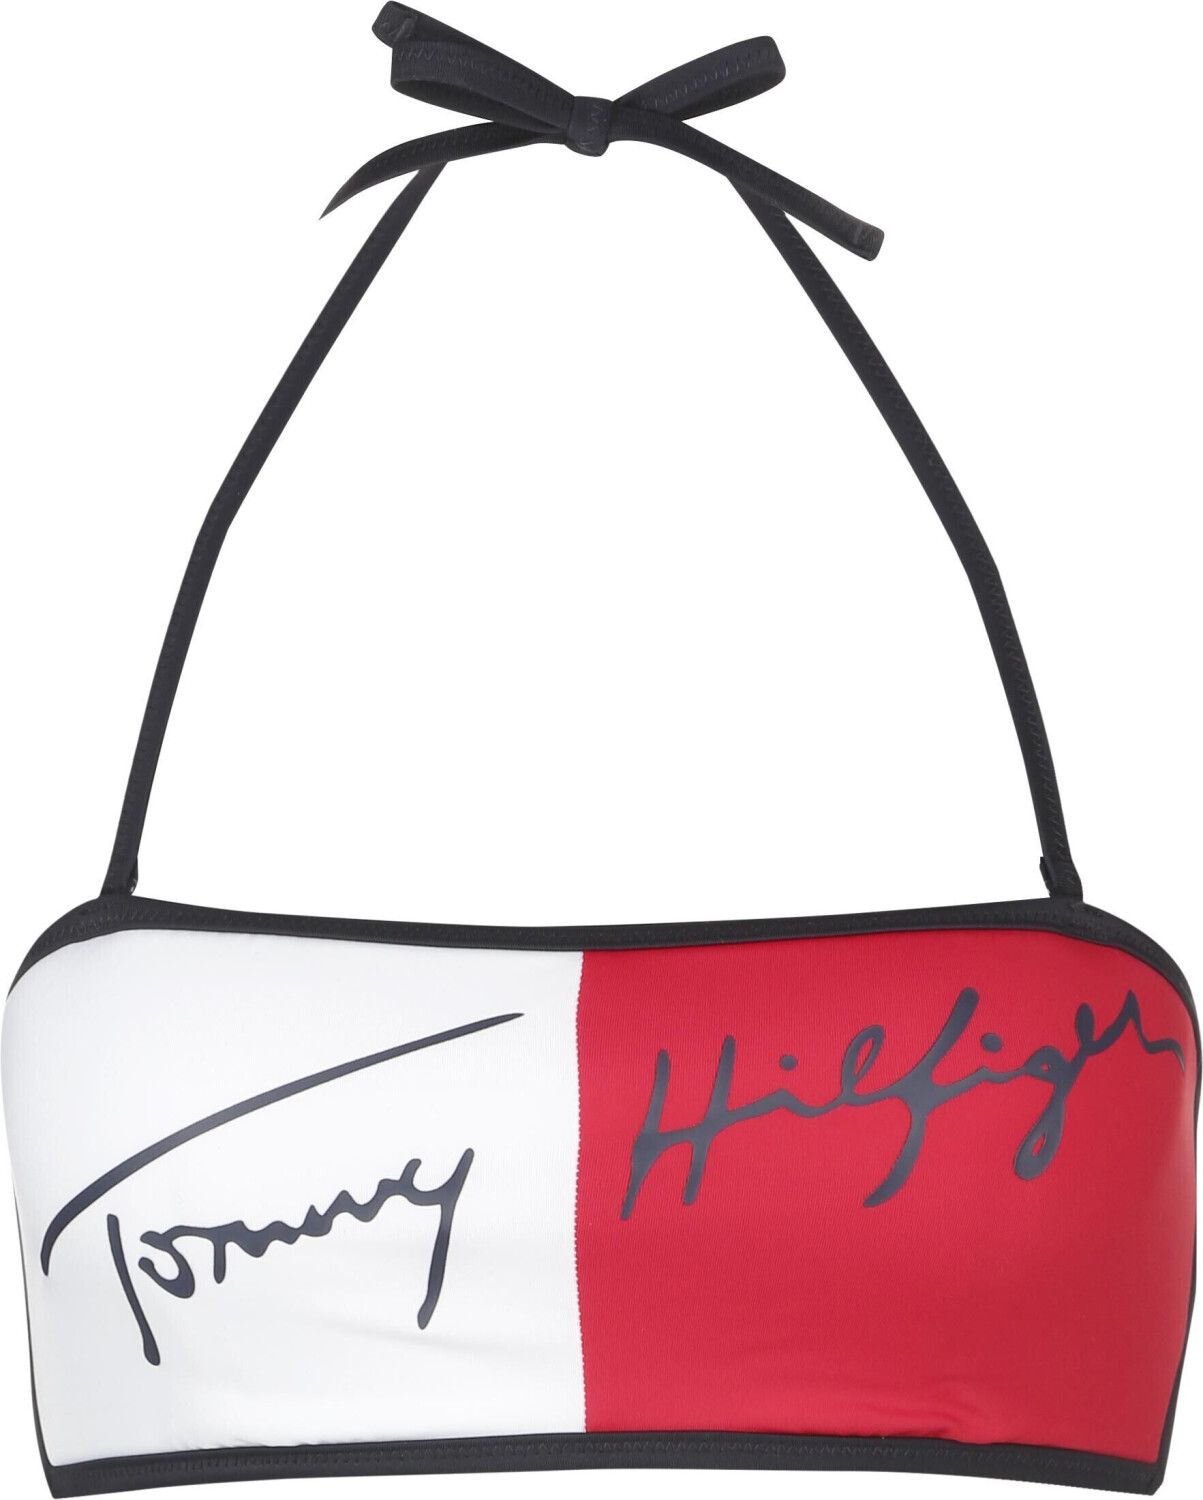 Tommy Hilfiger Signature Logo Bandeau Bikini Top red/white ab 47,00 € |  Preisvergleich bei